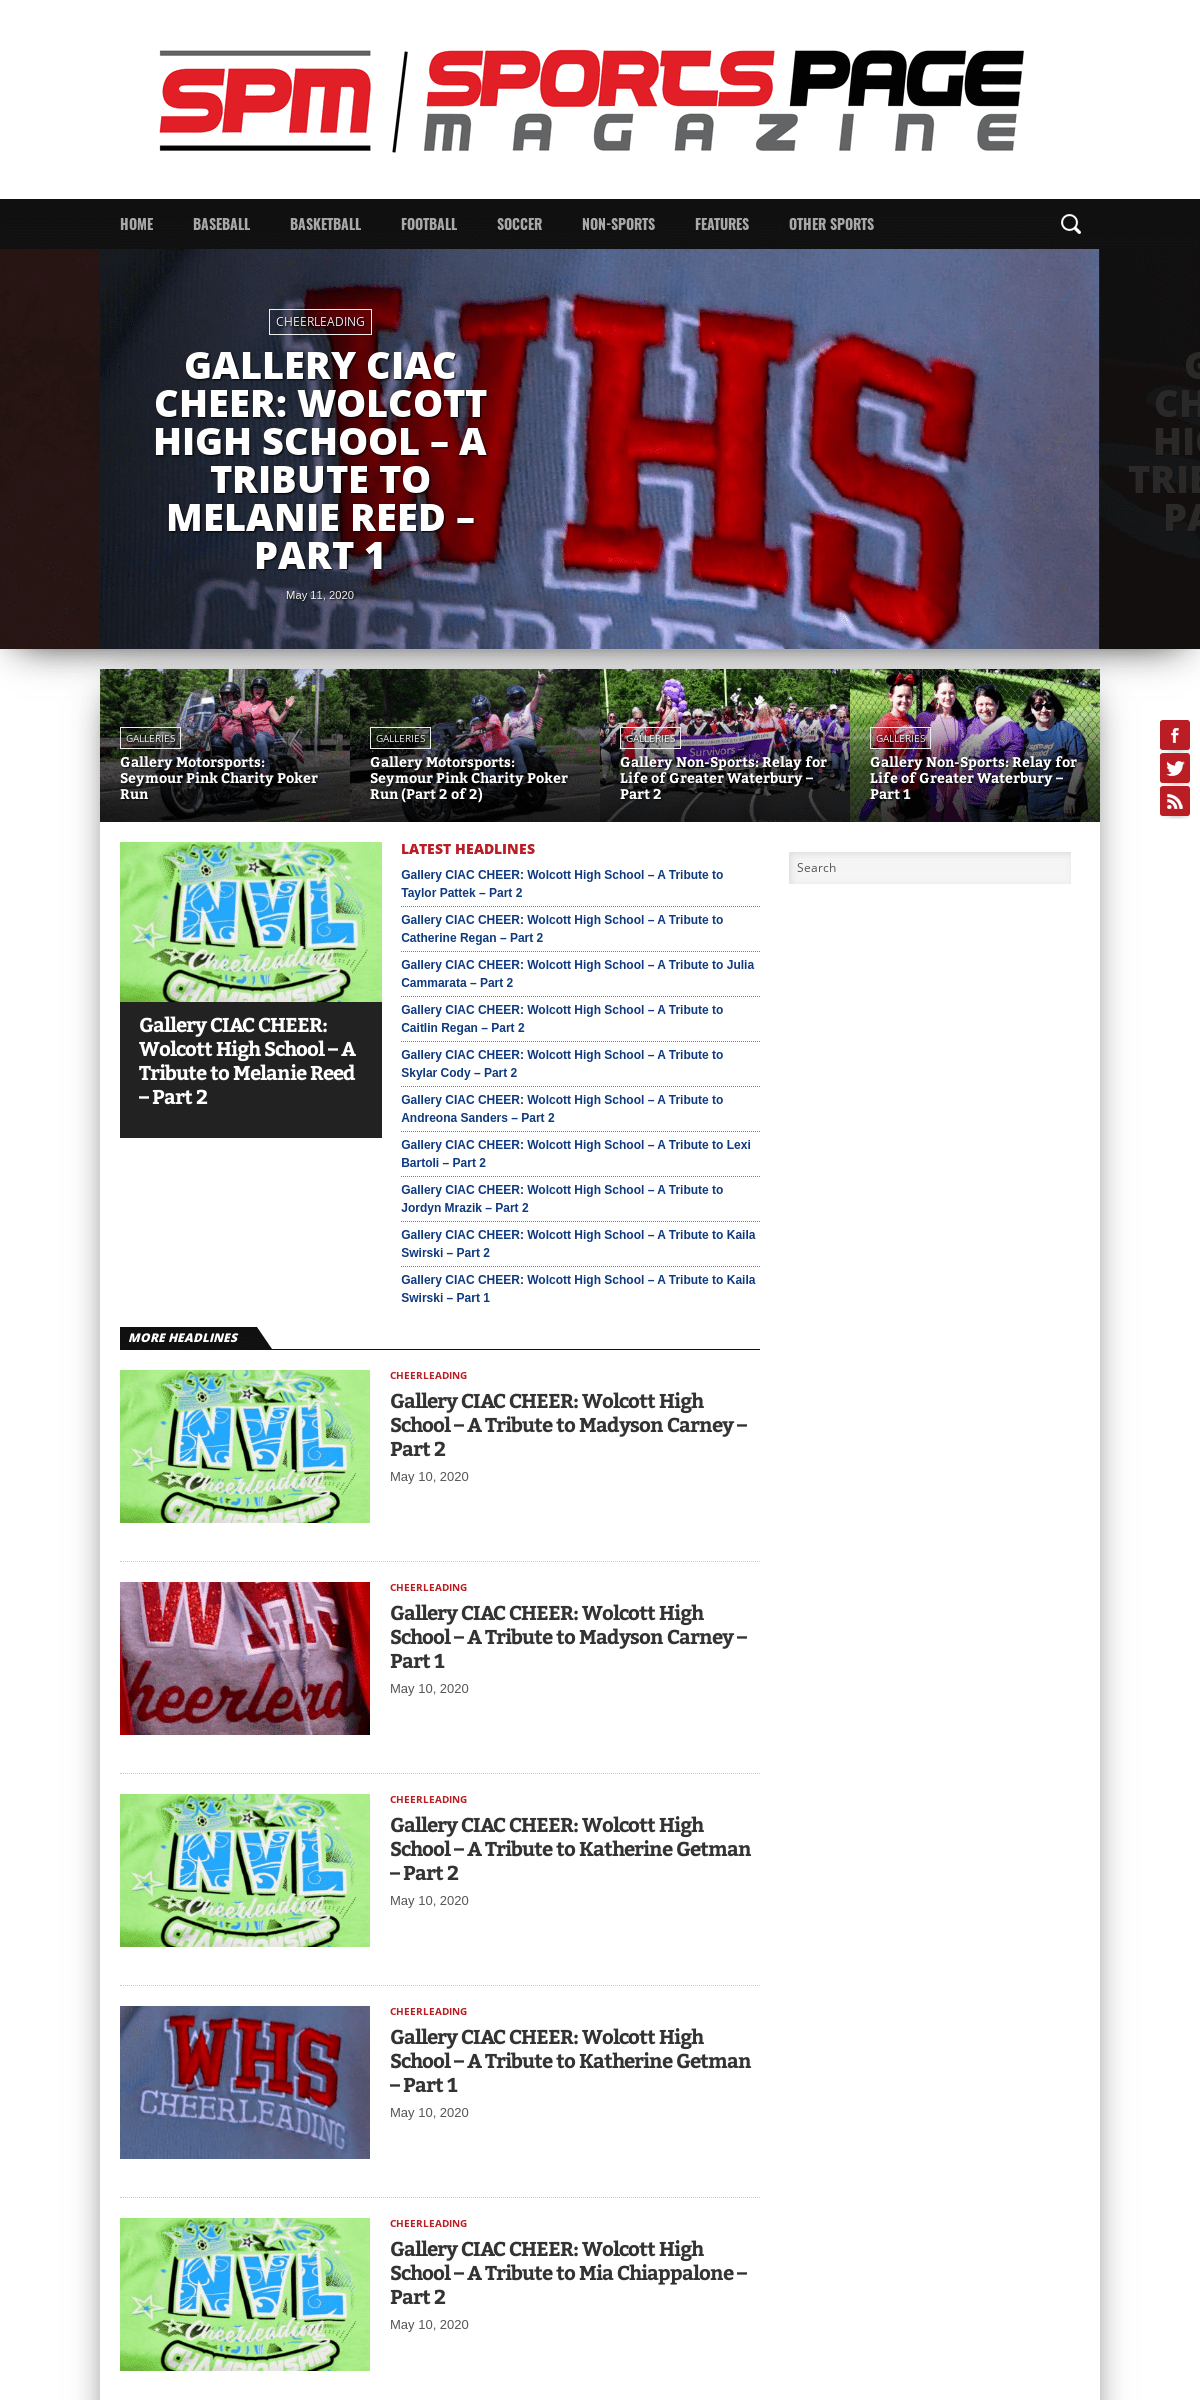 A complete backup of sportspagemagazine.com